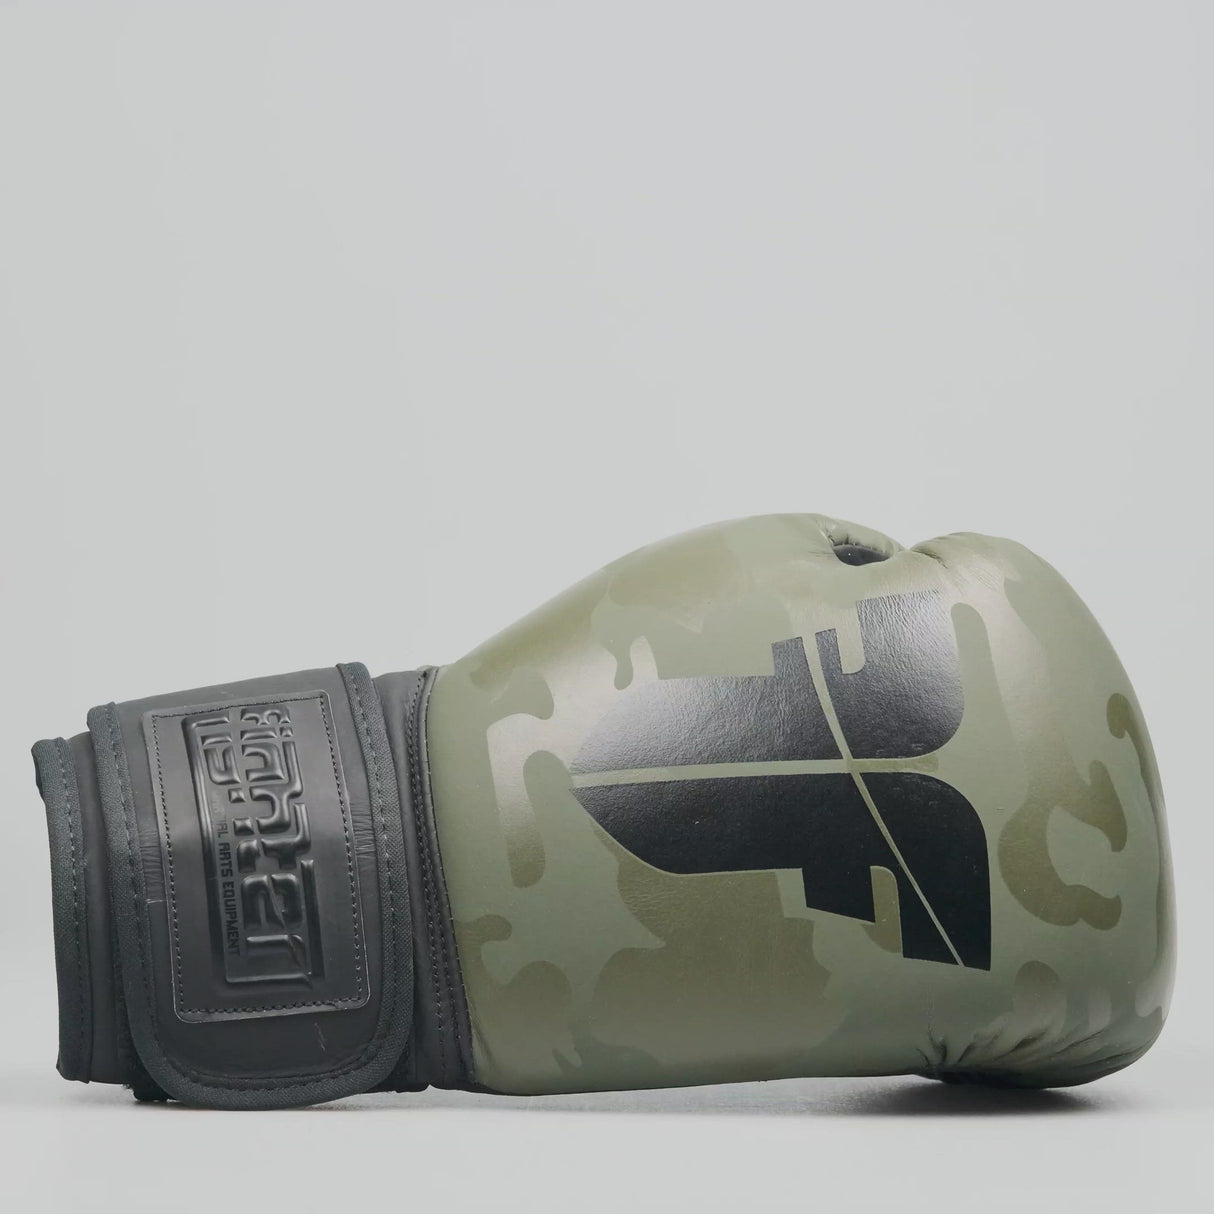 Gants de boxe Fighter SIAM - camouflage kaki, FBG-003CKH